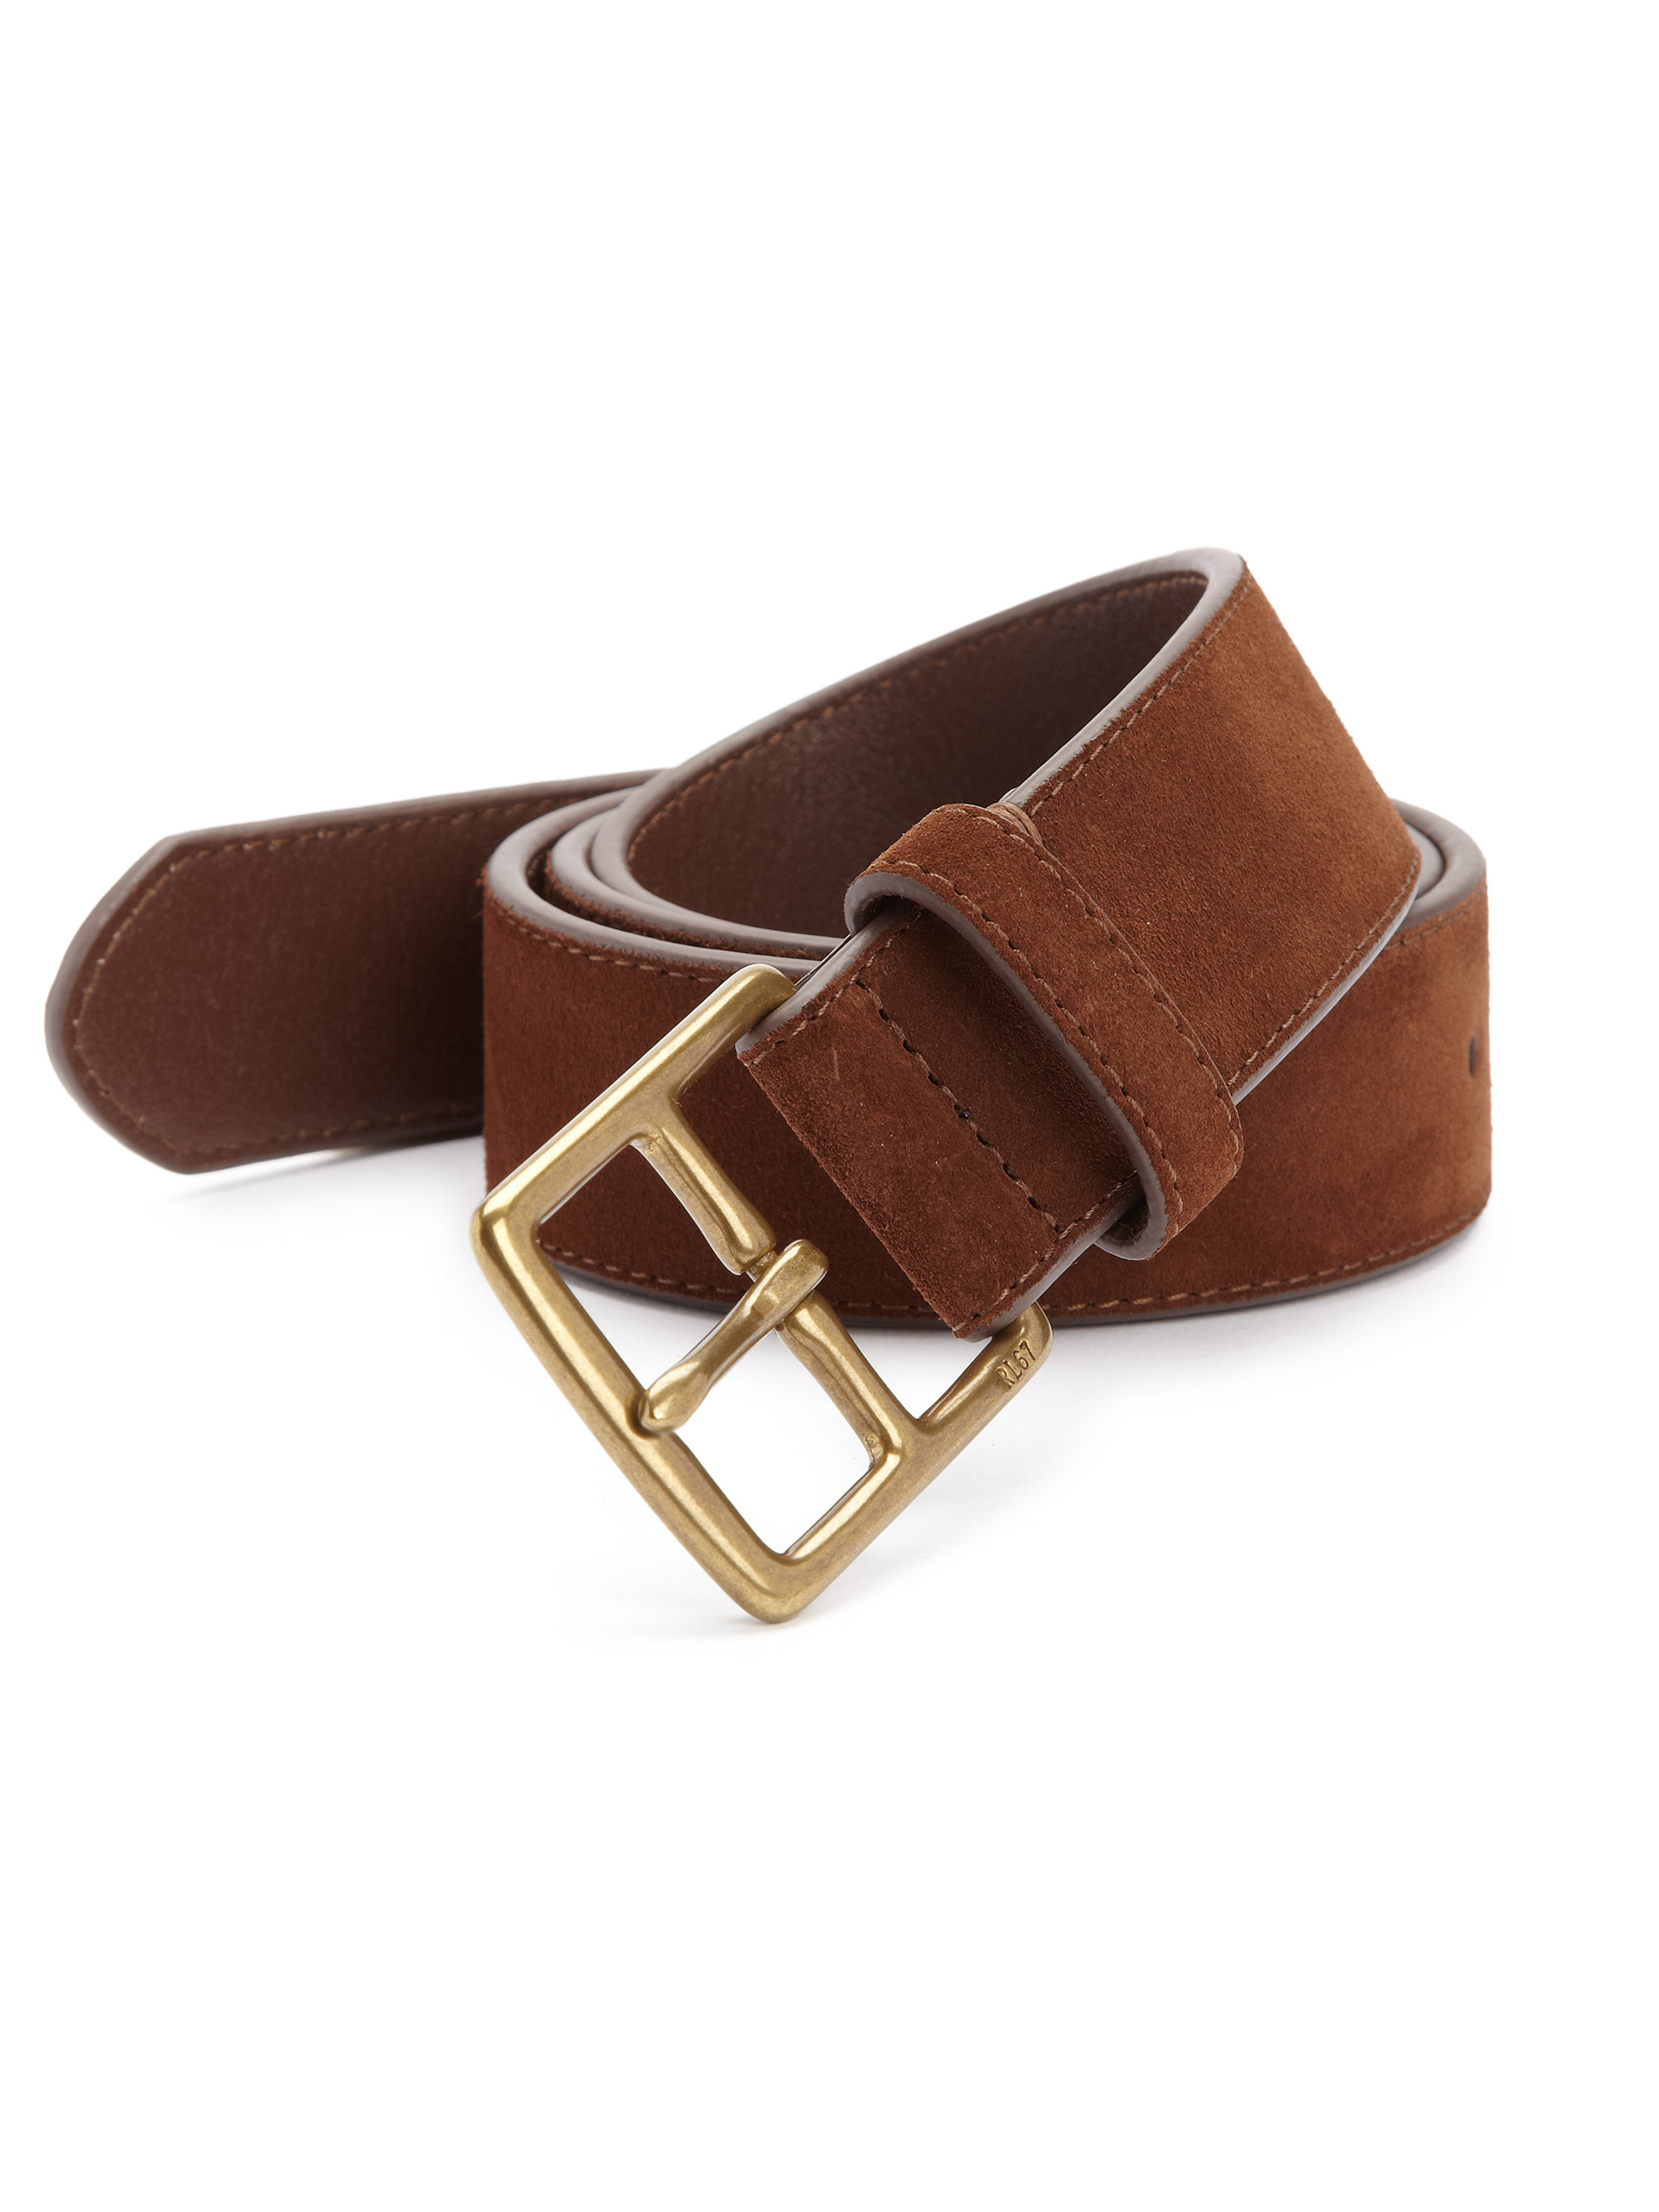 Polo ralph lauren Sportsman Braided Leather Belt in Brown for Men | Lyst